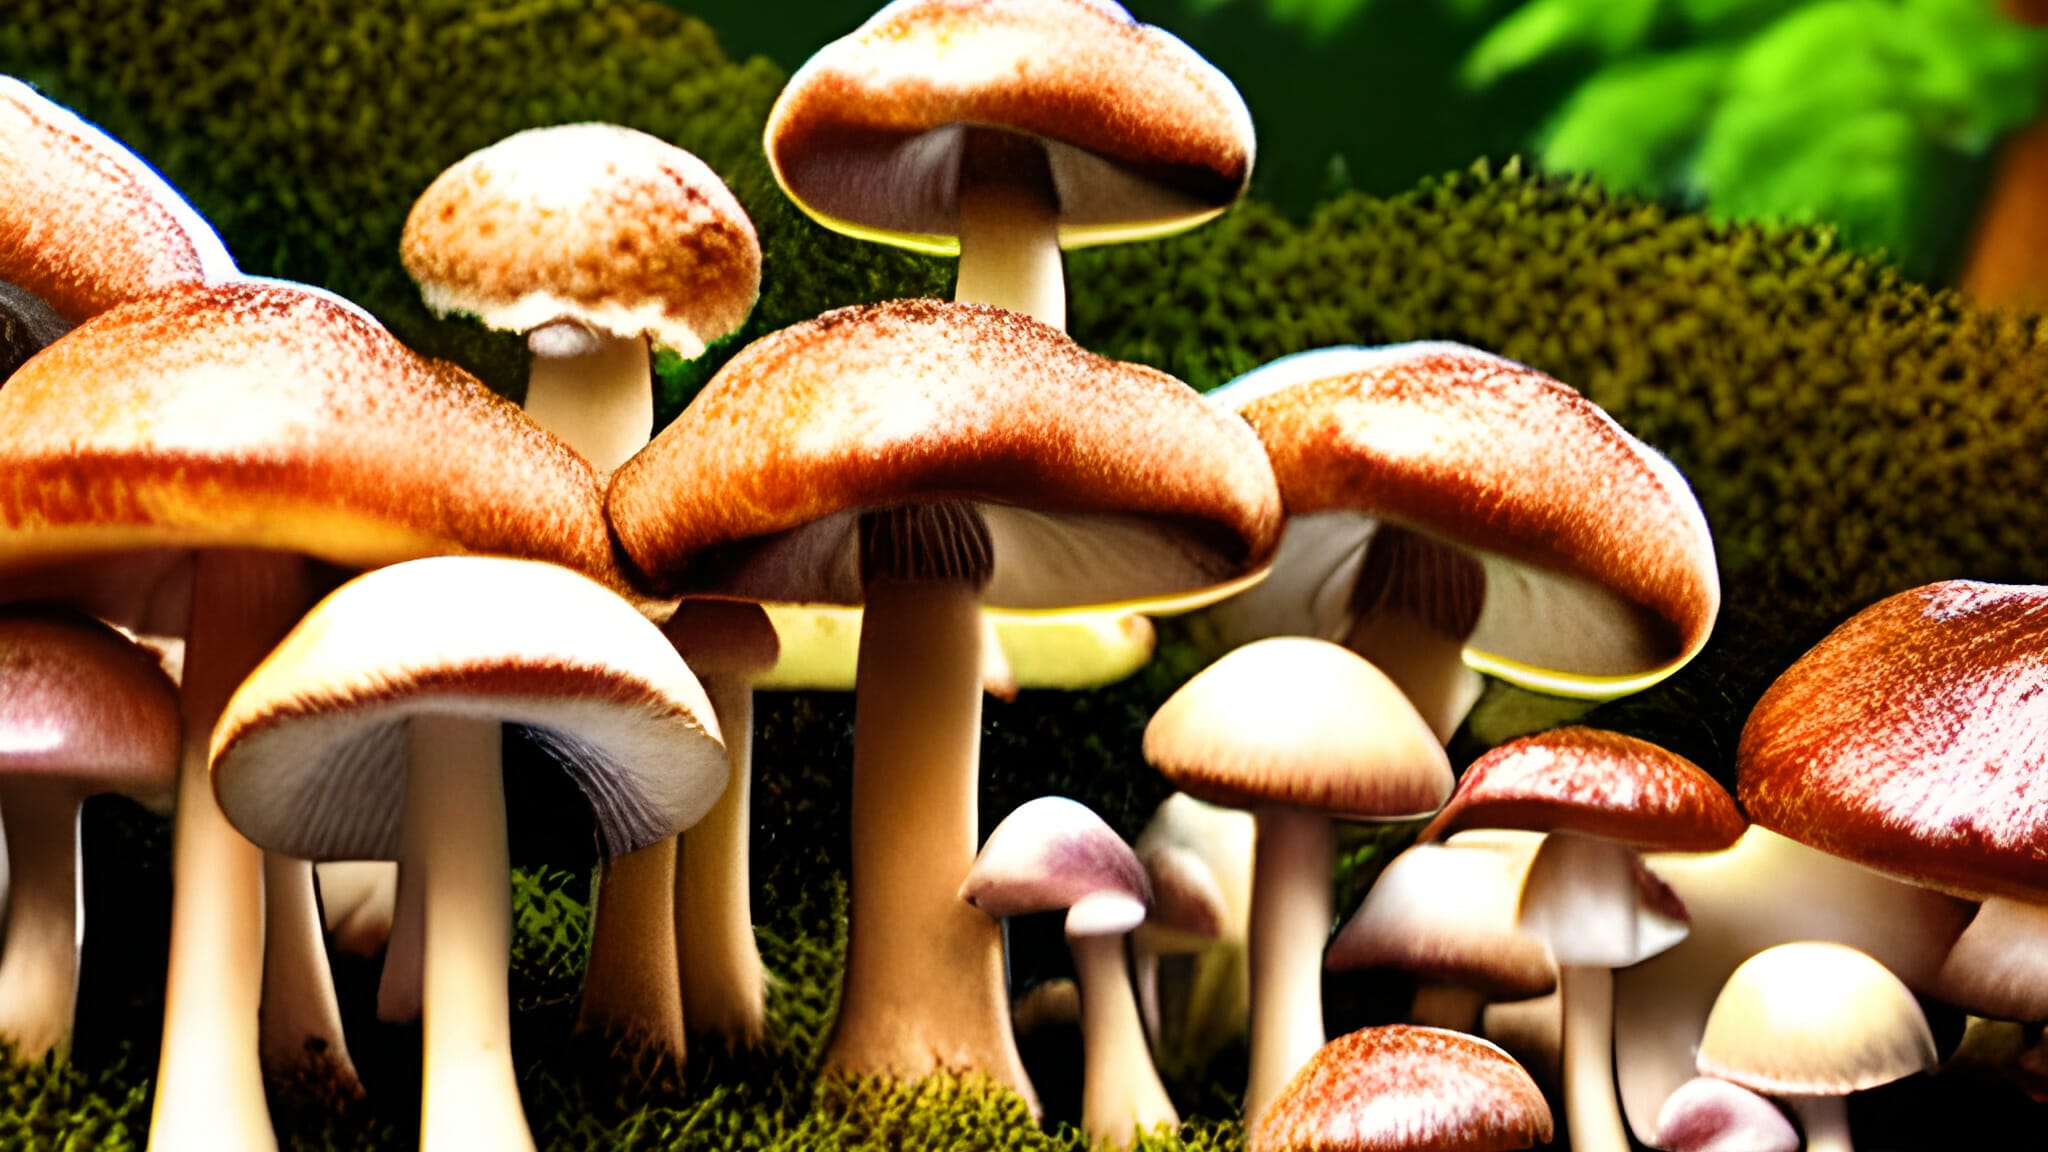 About True 2 Mushrooms